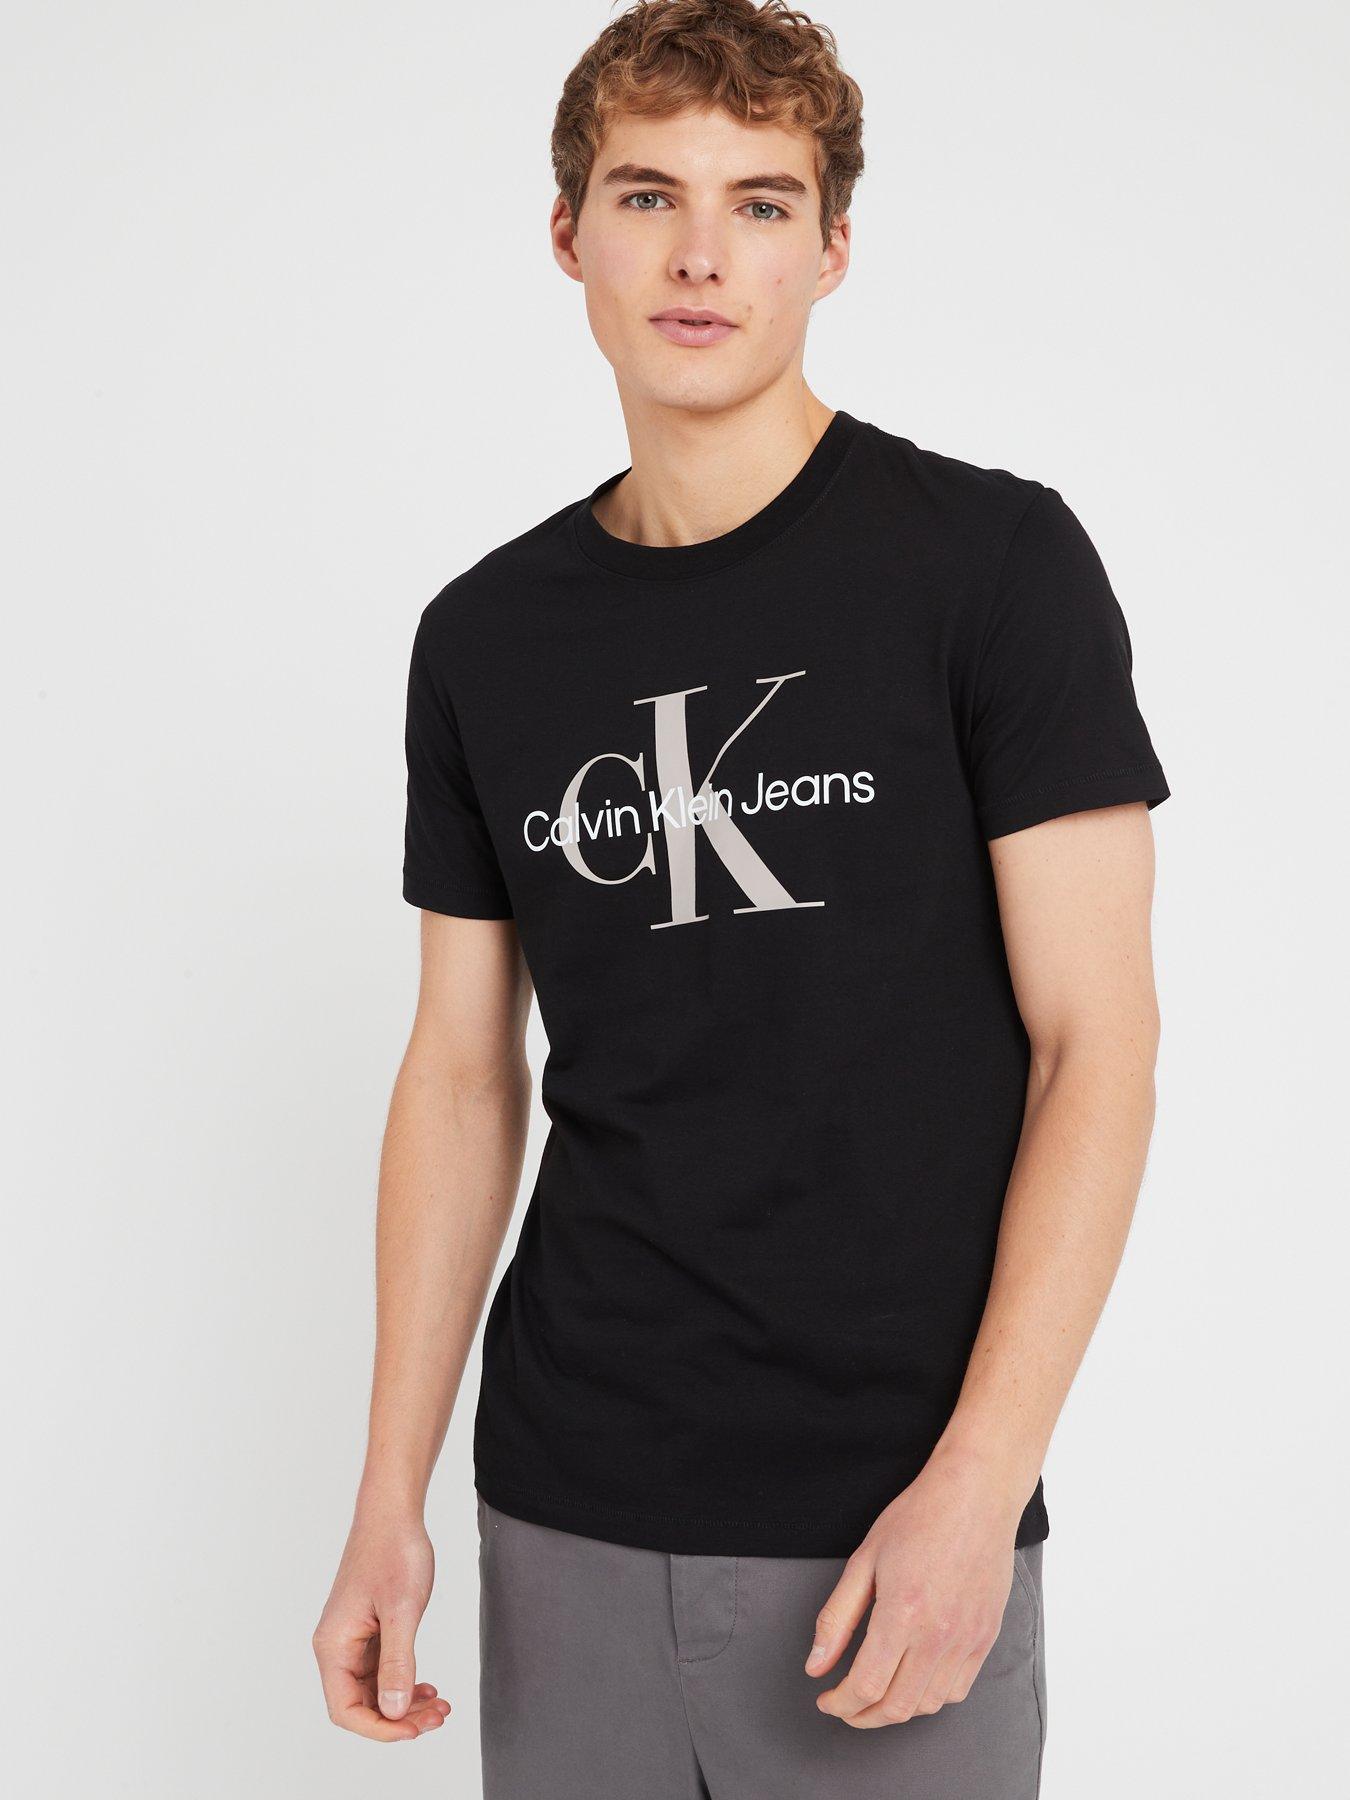 Black | T-shirts Very & | Ireland | Calvin Men | klein polos